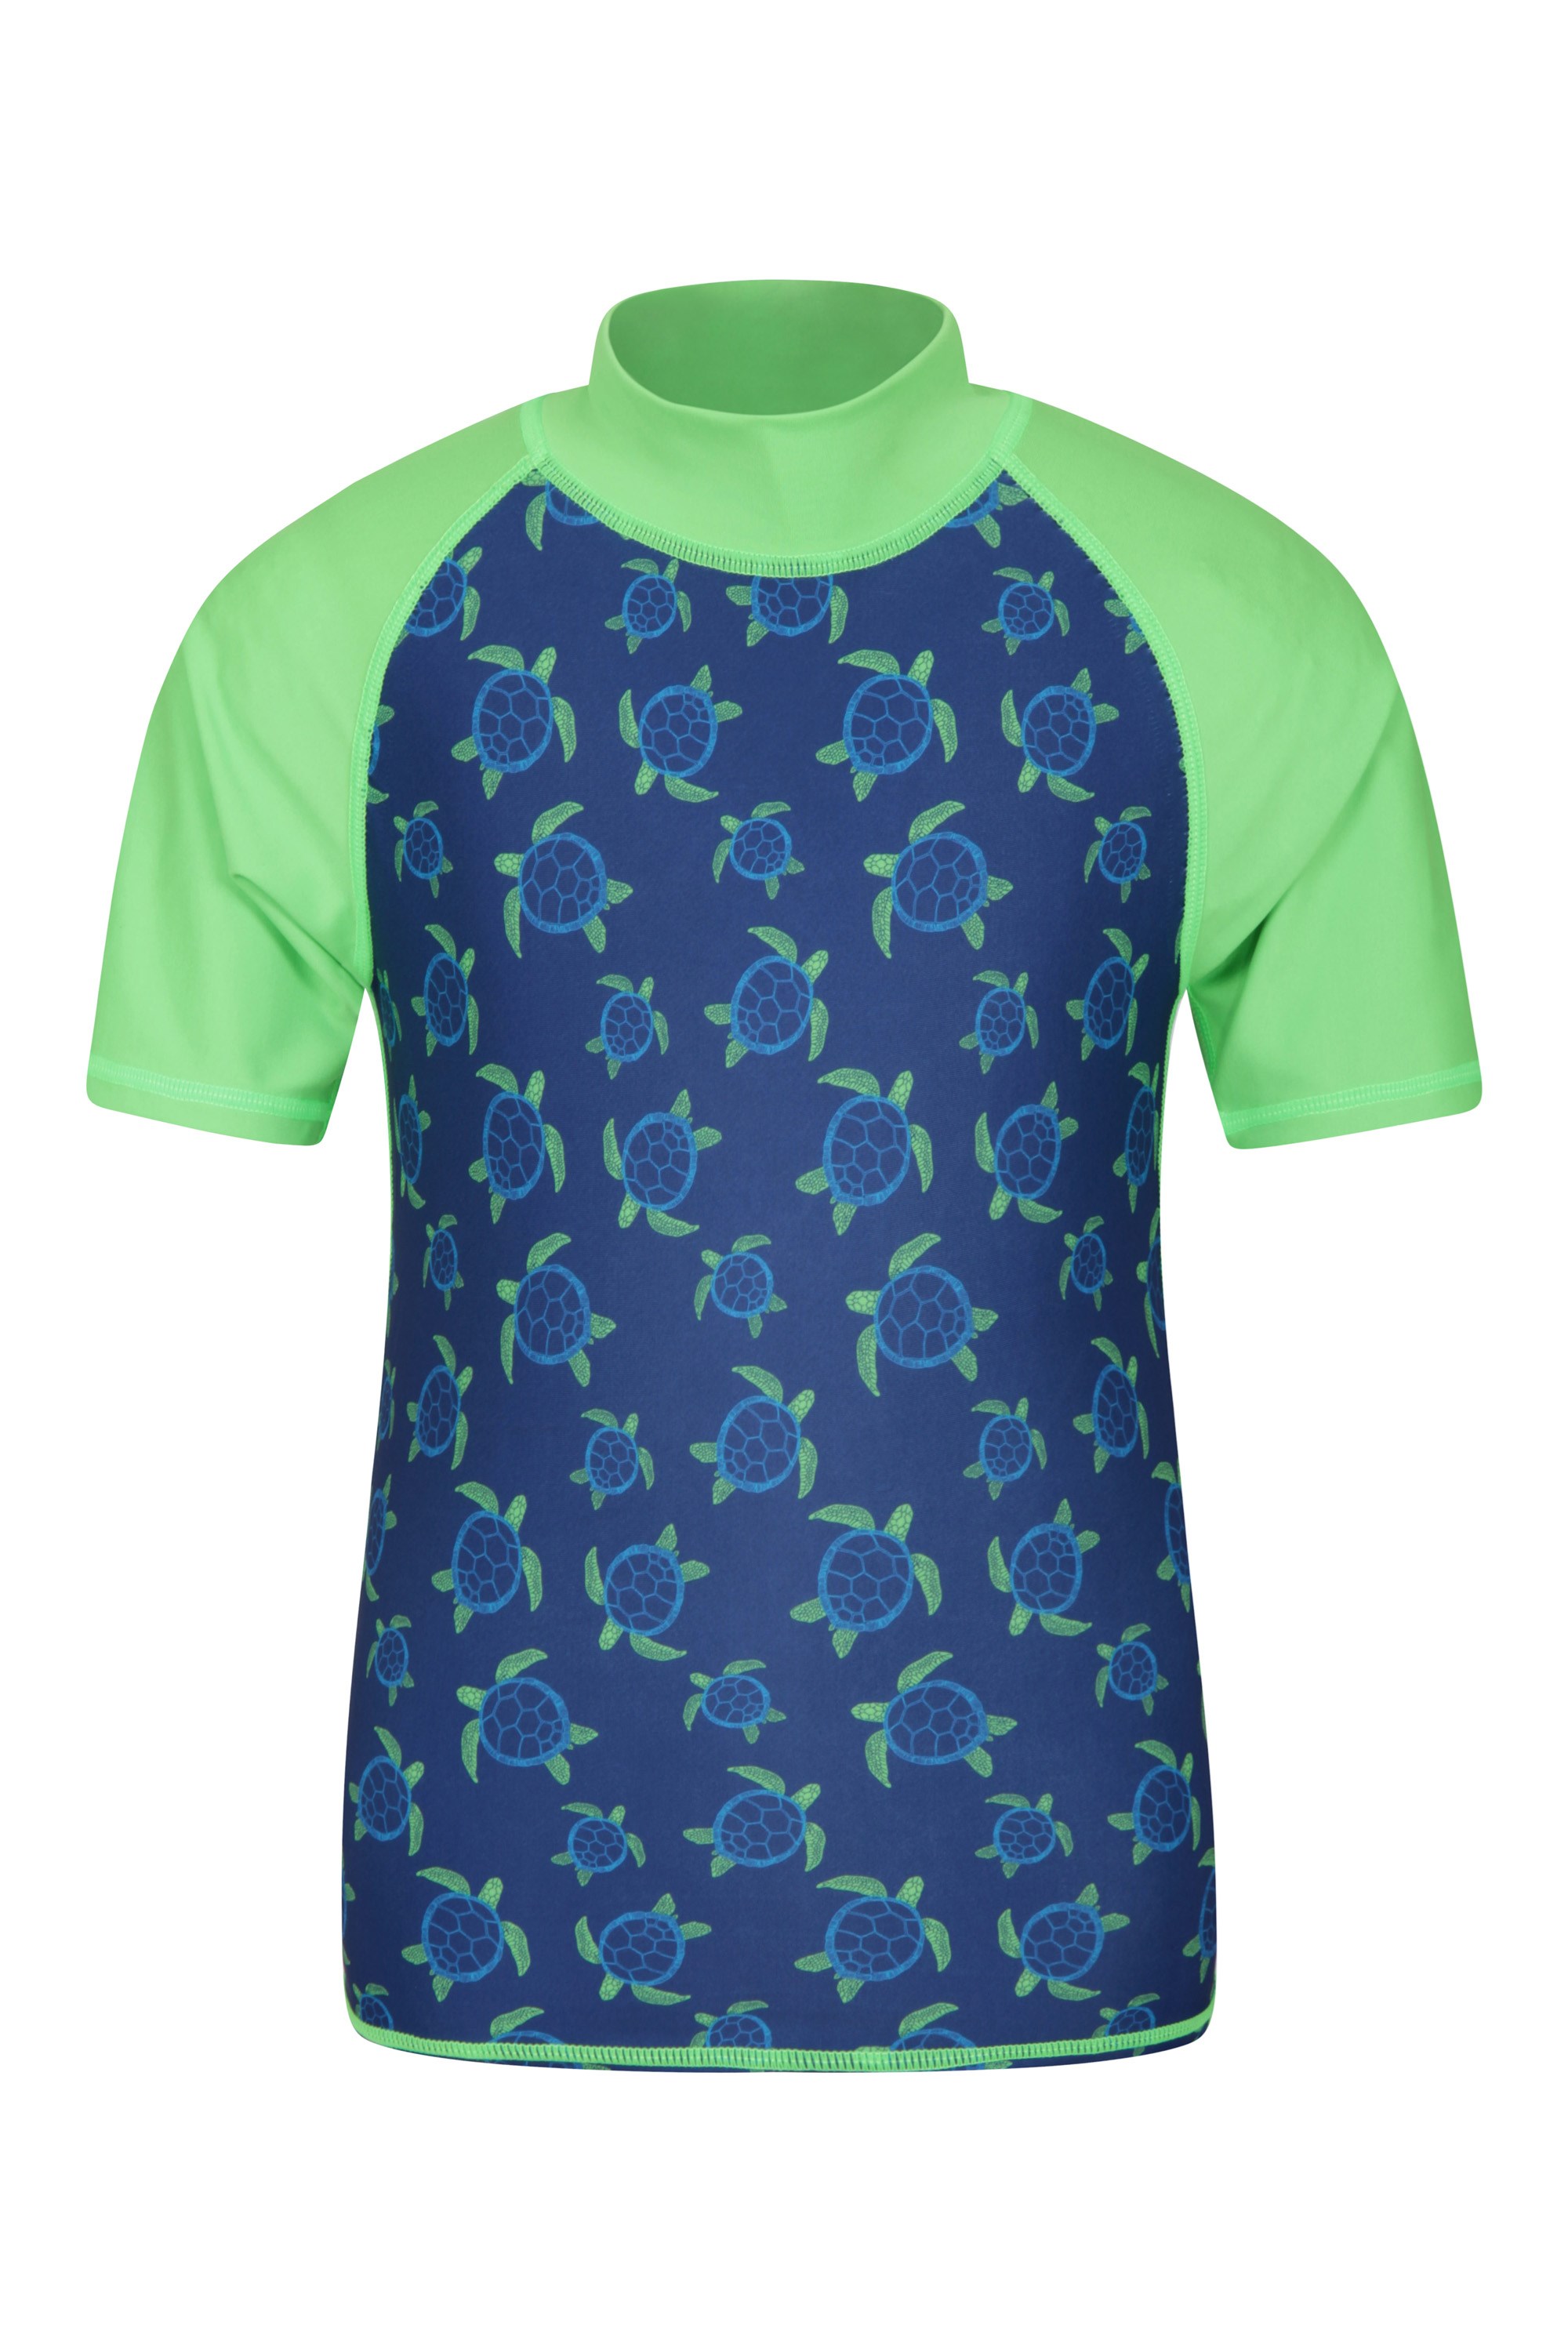 T-Shirt Anti UV Enfants - Vert